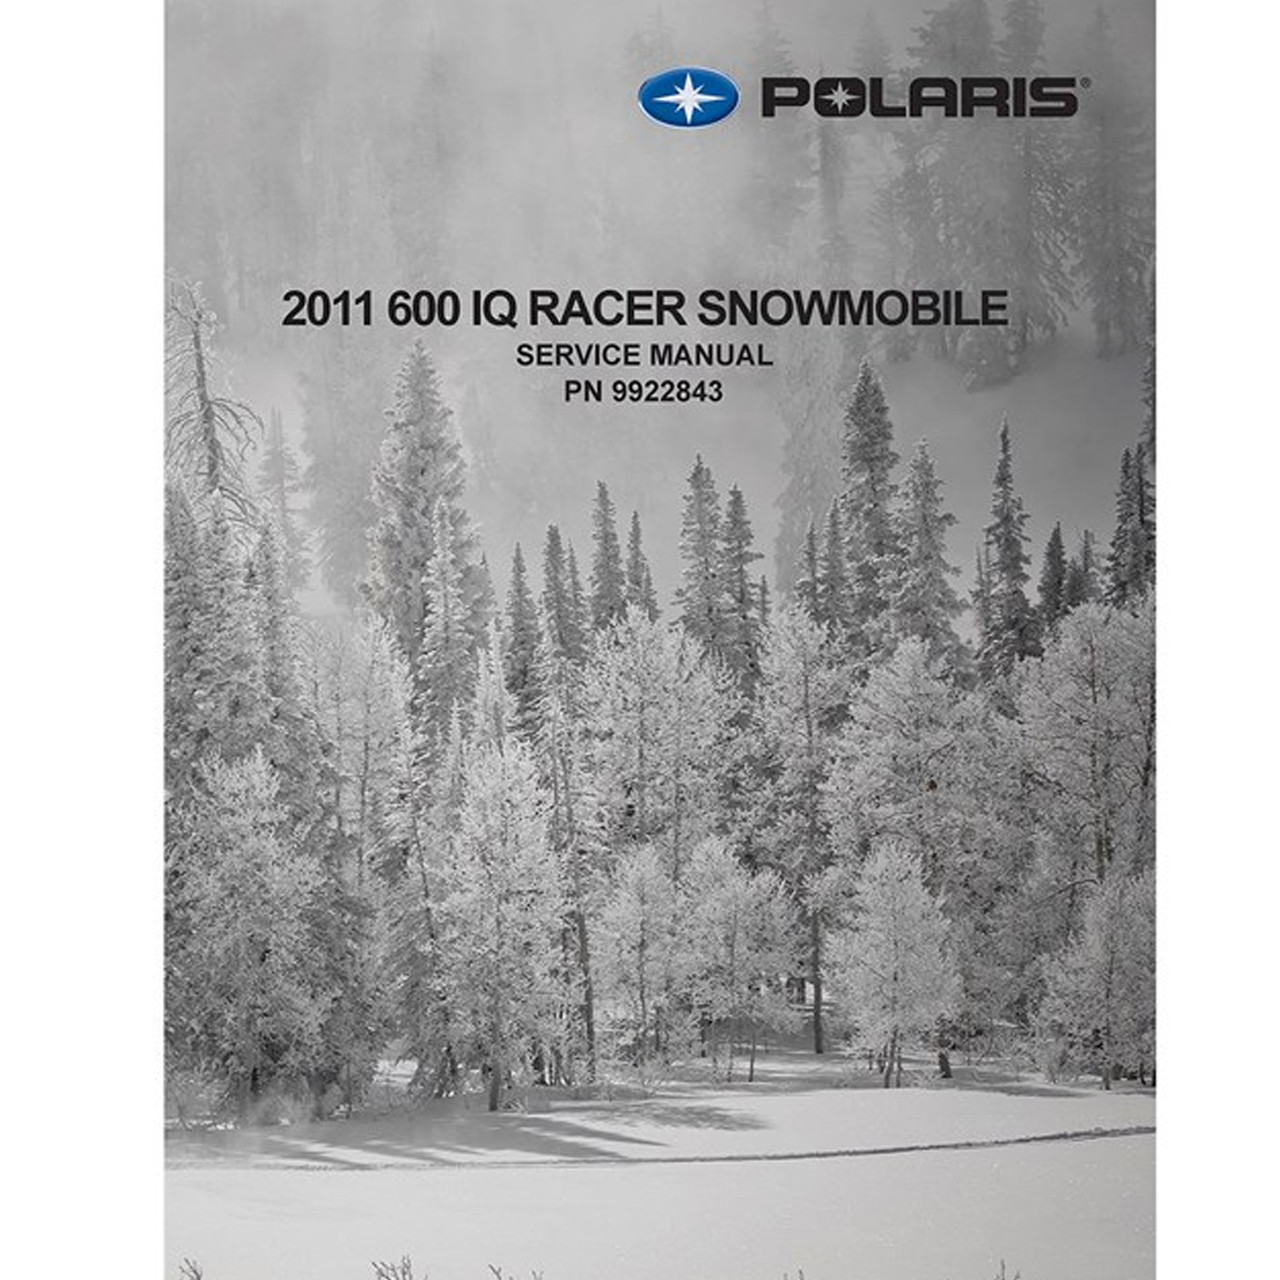 Polaris Snowmobile New OEM, Service Manual, 2011 600 IQ RACER, 9922843